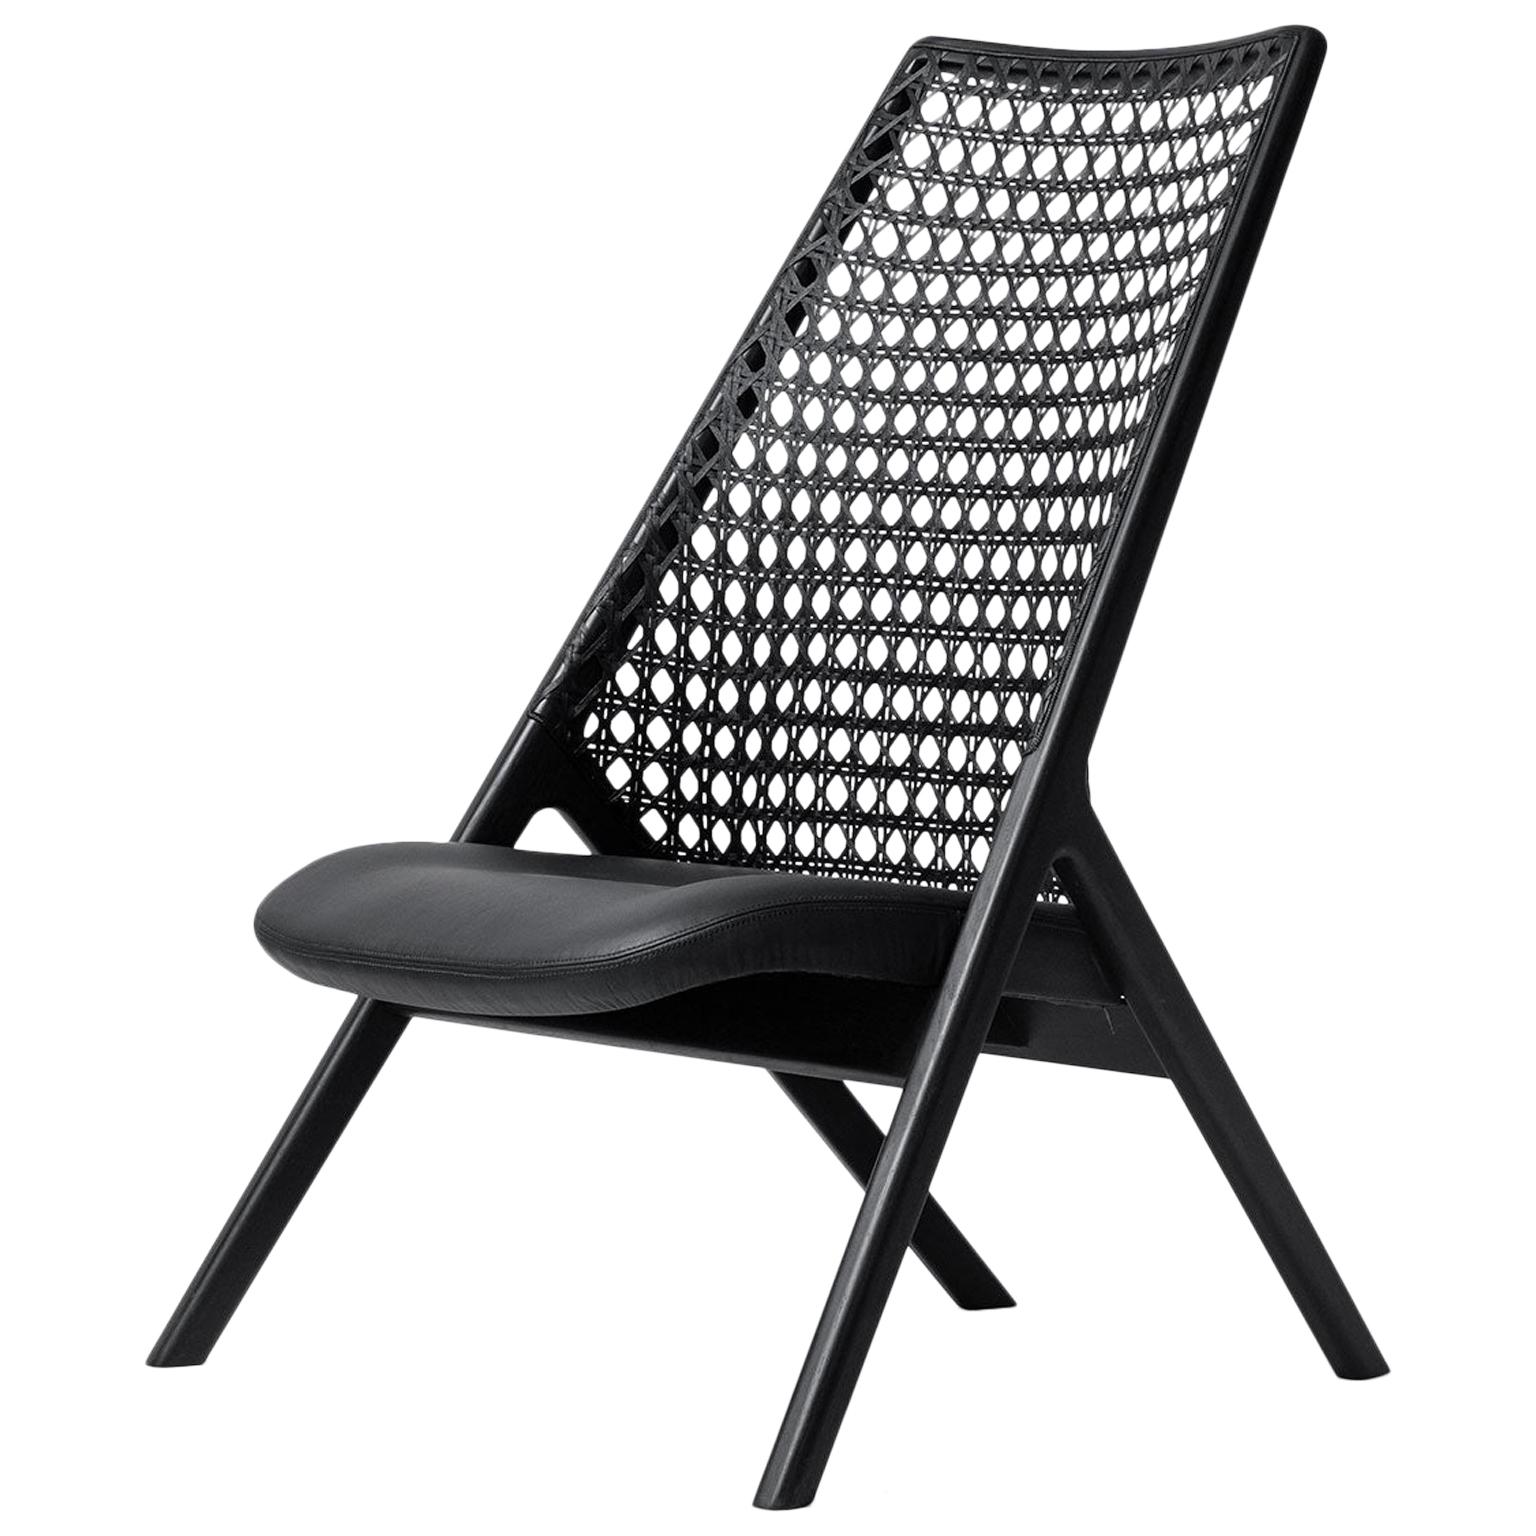 Tela Lounge Chair All Black, by Wentz, Brazilian Contemporary Design